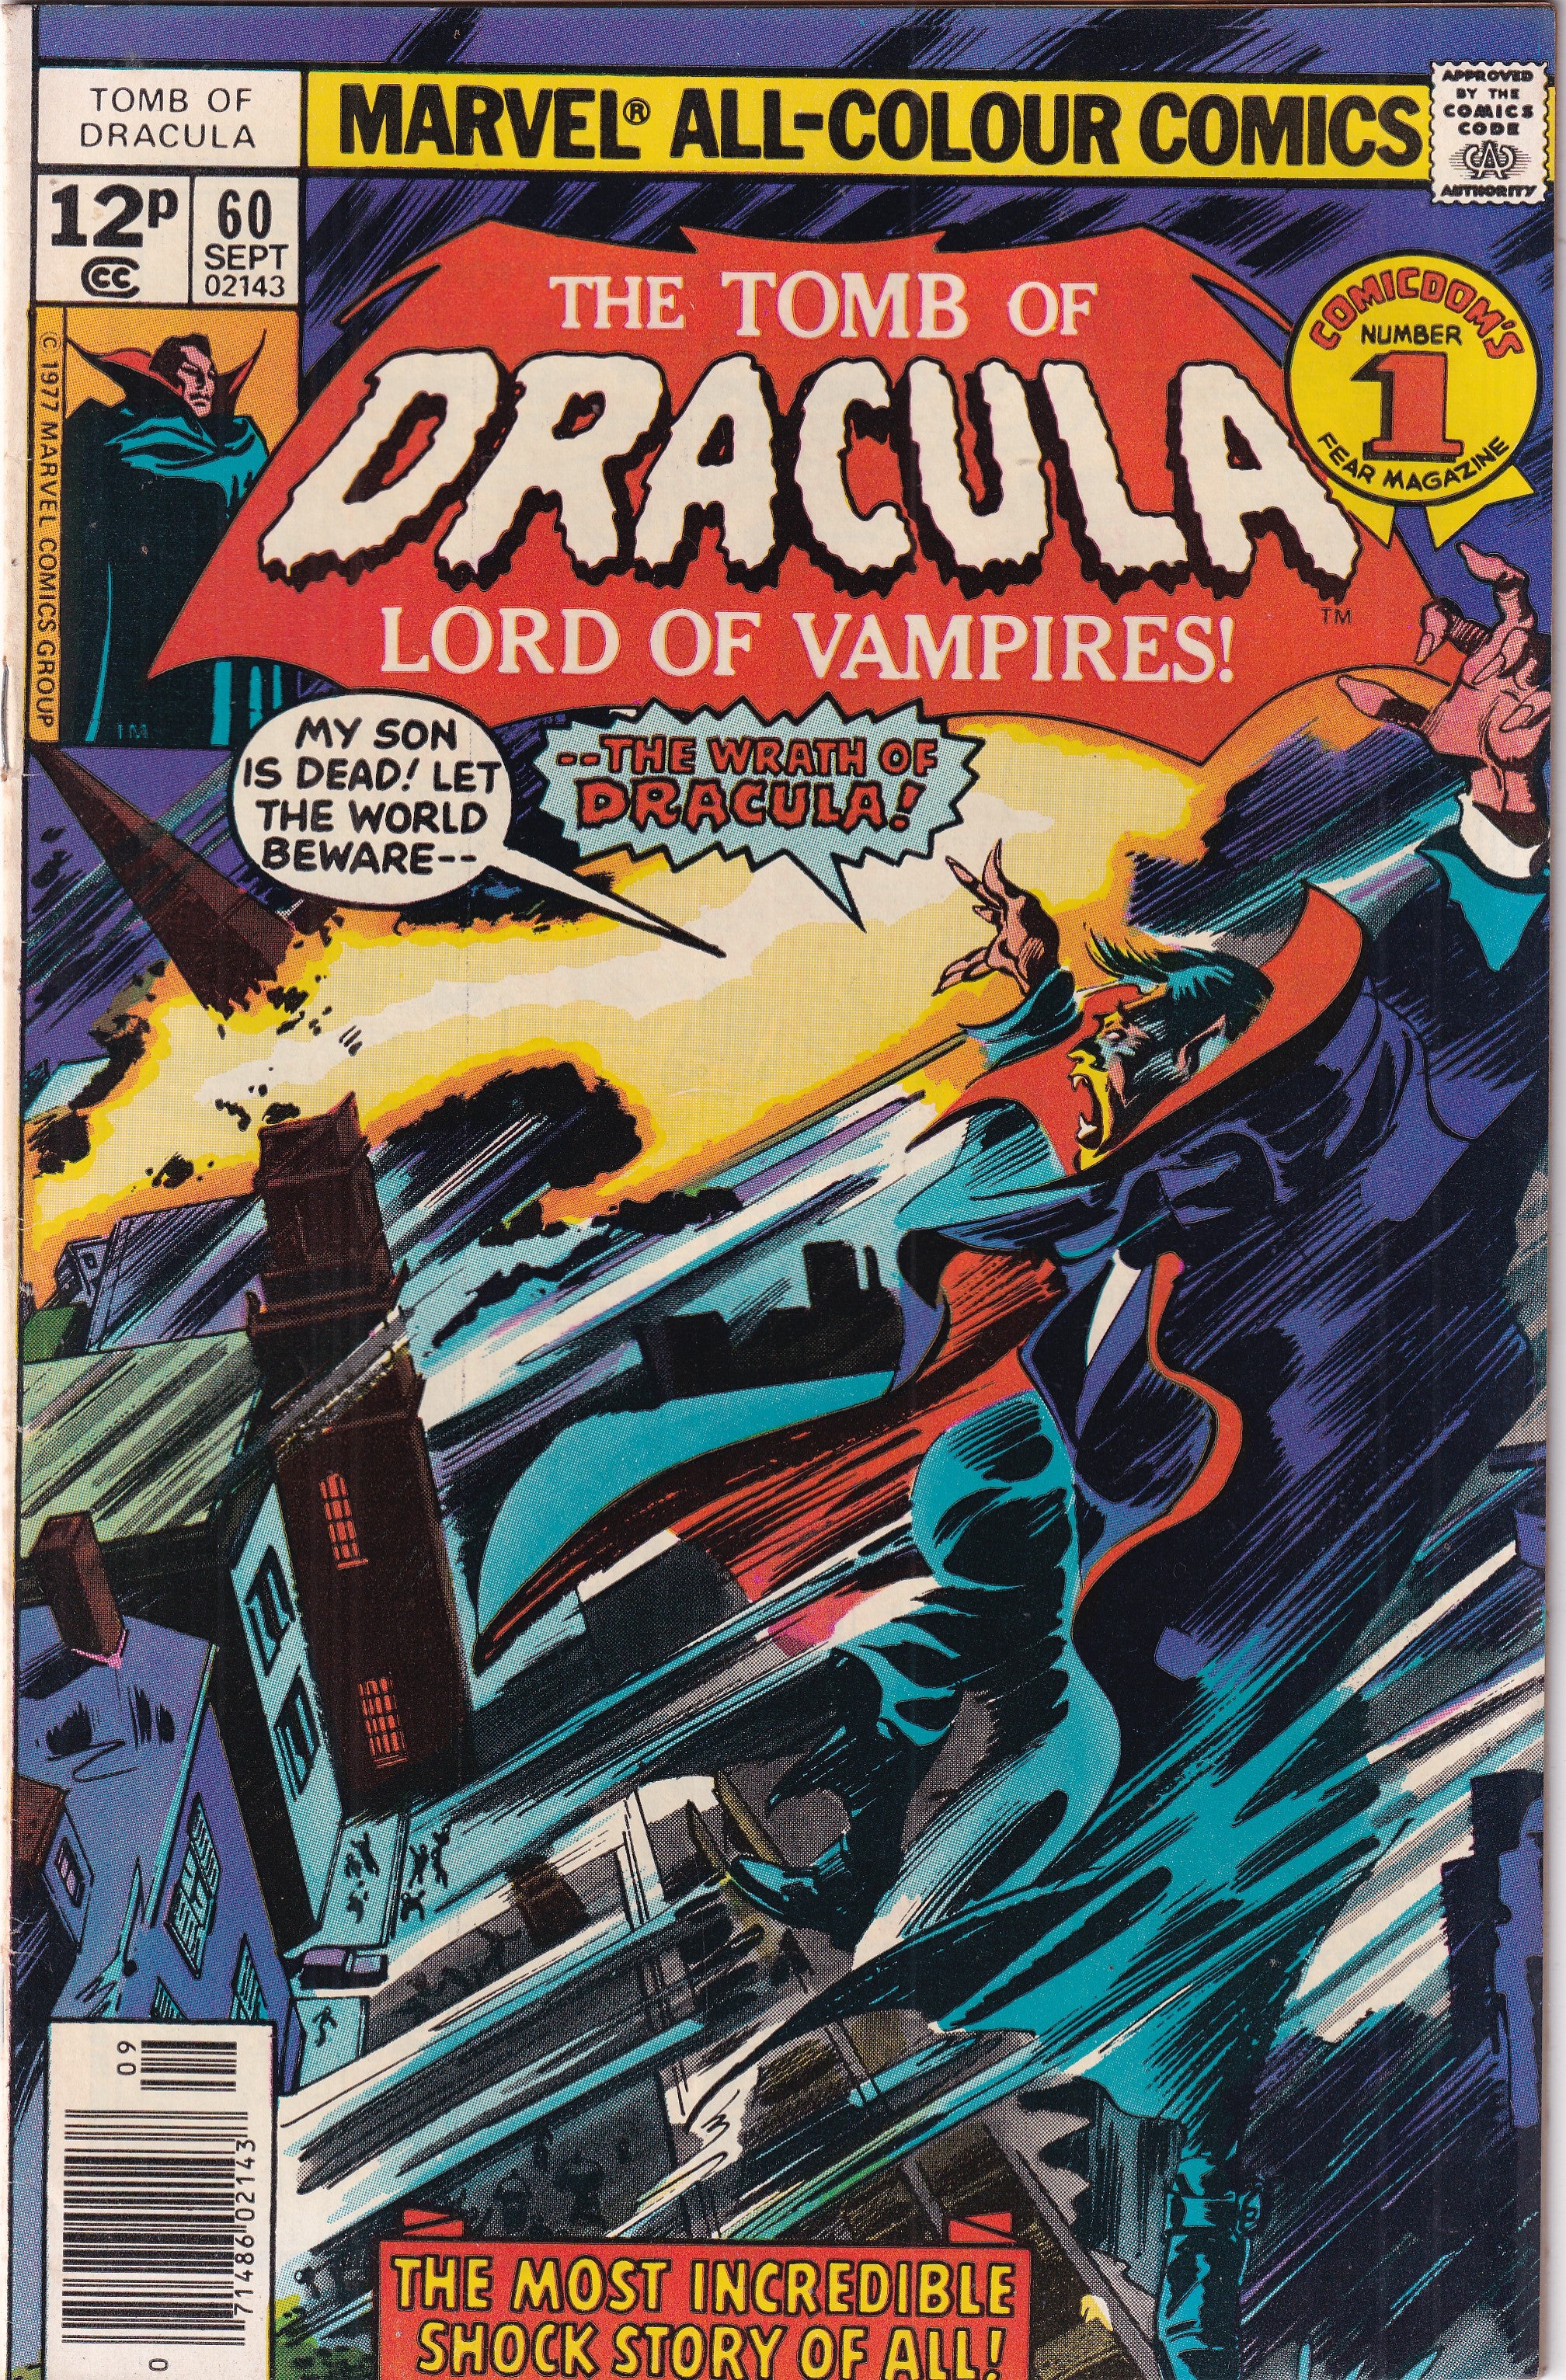 TOMB OF DRACULA #60 - Slab City Comics 